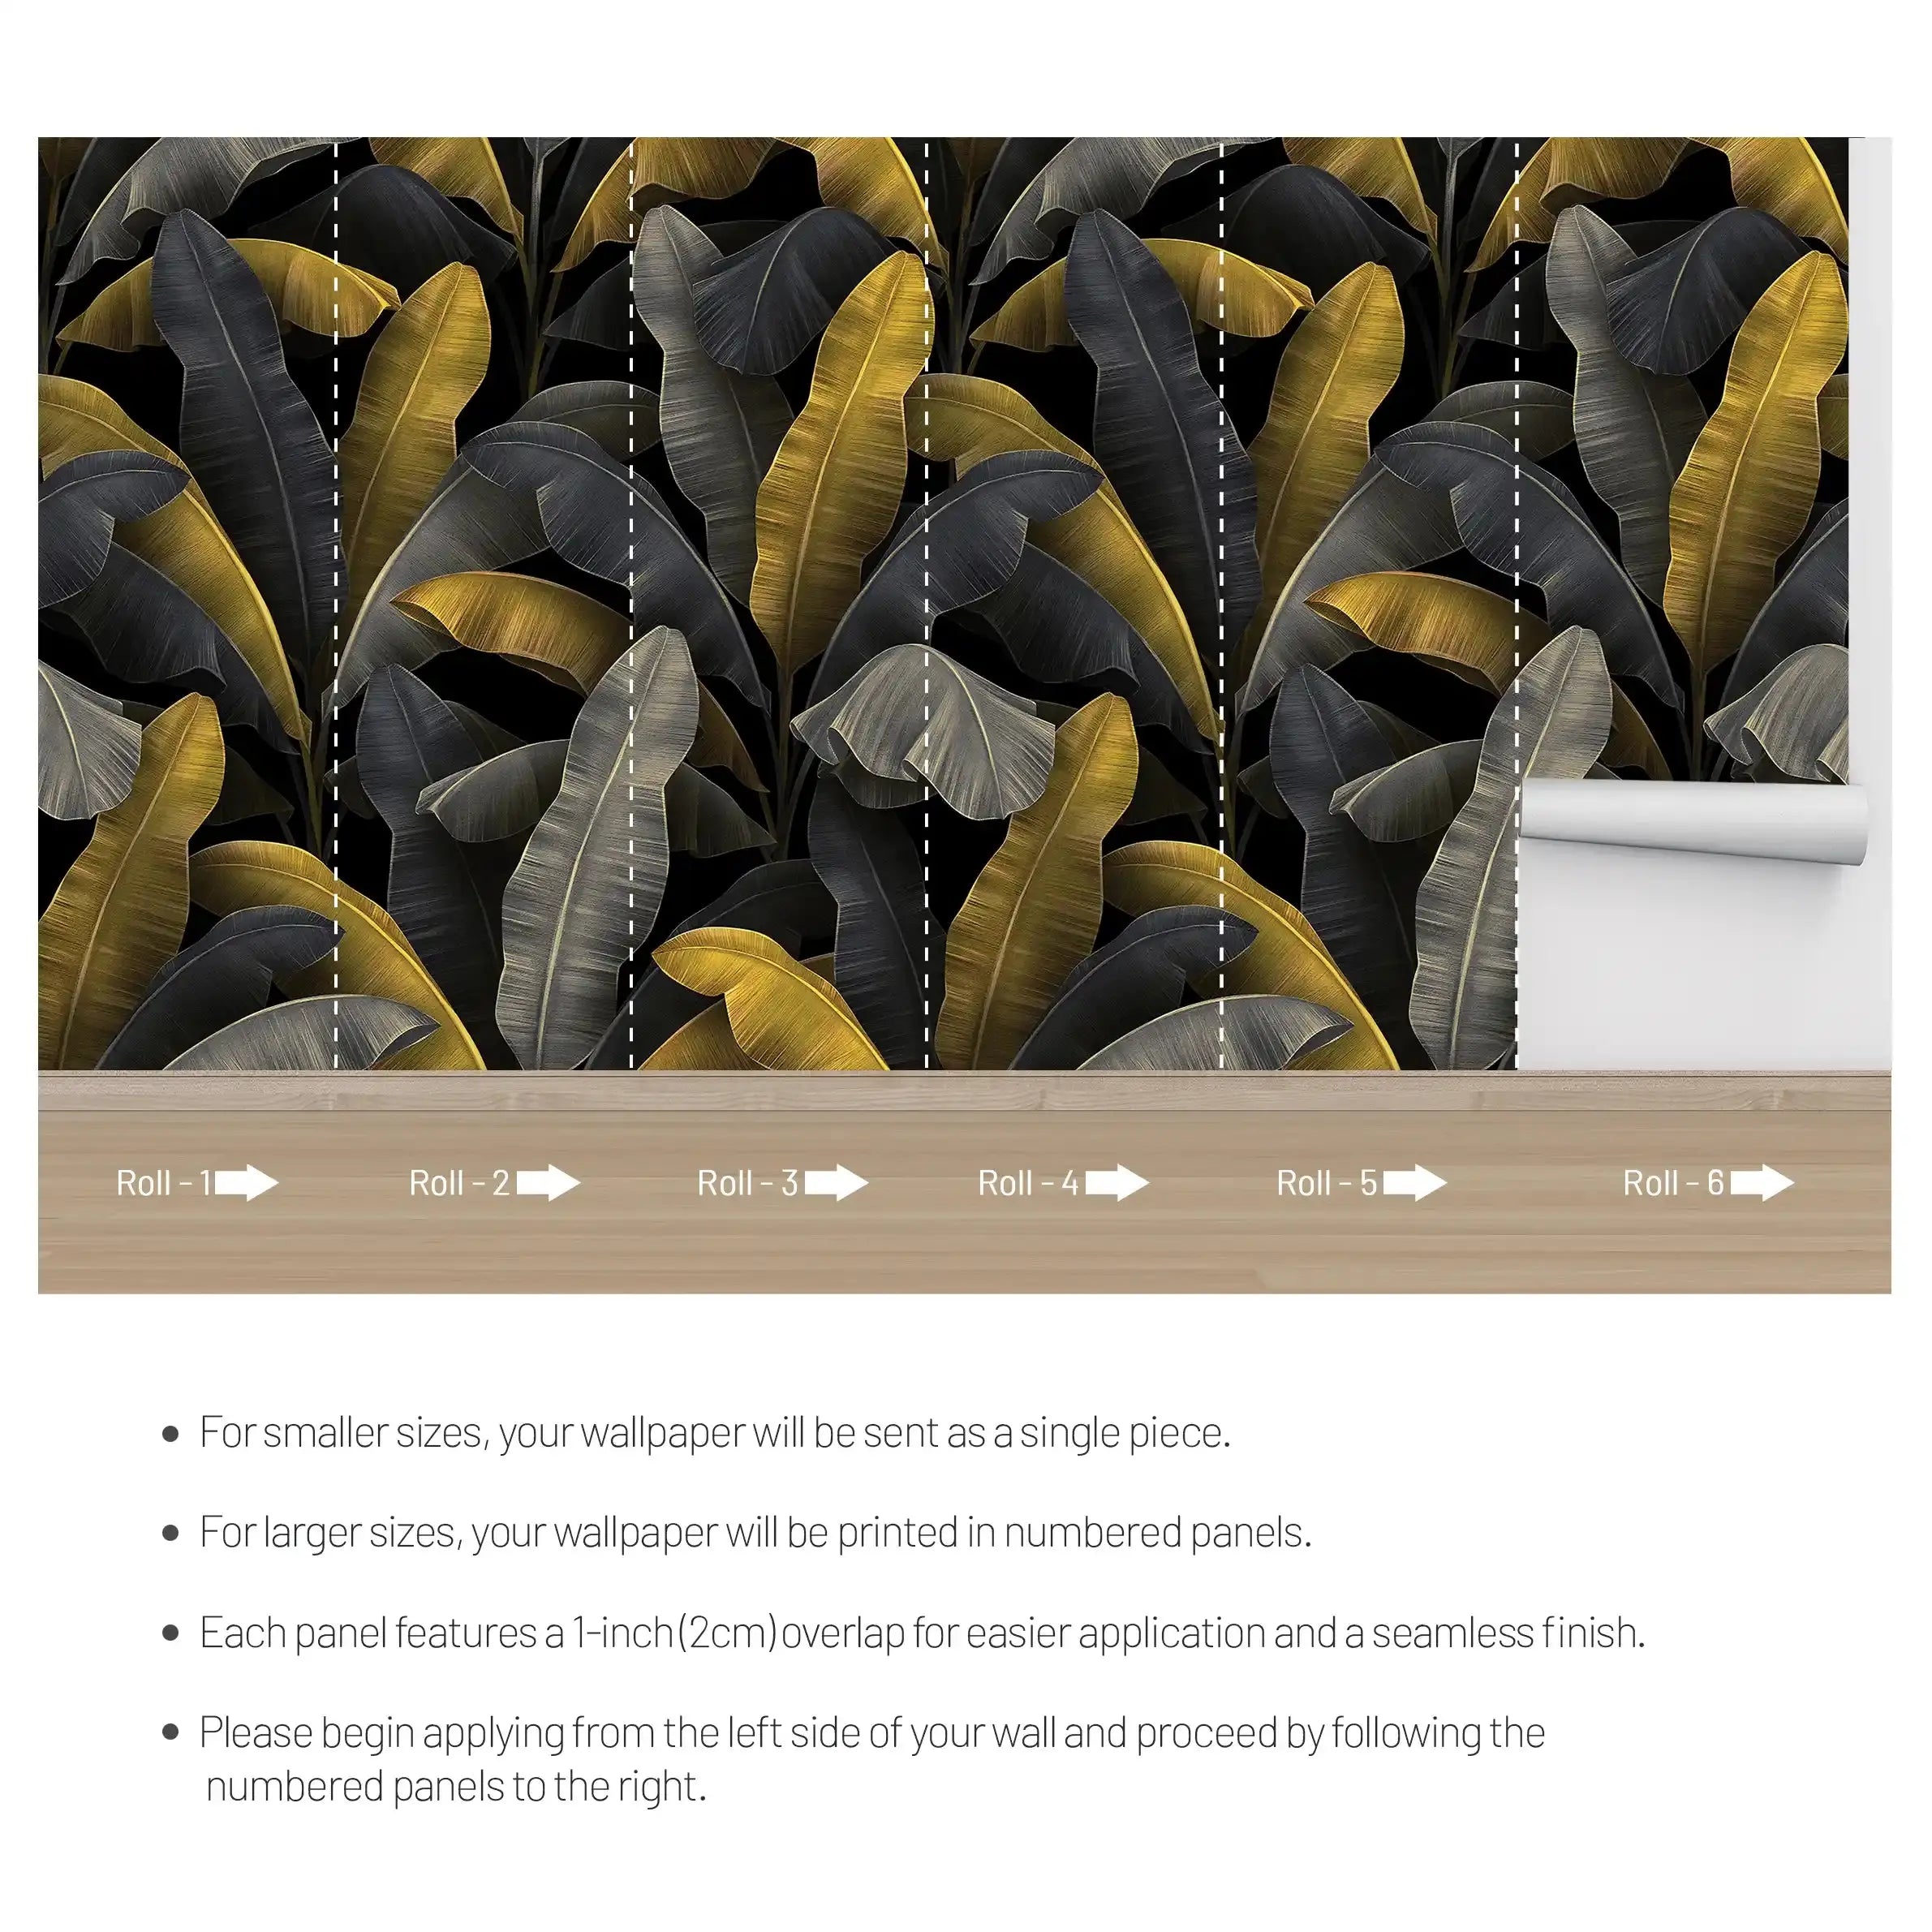 3062-A / Botanical Peelable Stickable Wallpaper with Gold Banana Leaves - Self-Adhesive, Removable Wallpaper for Walls, Boho Decor - Artevella